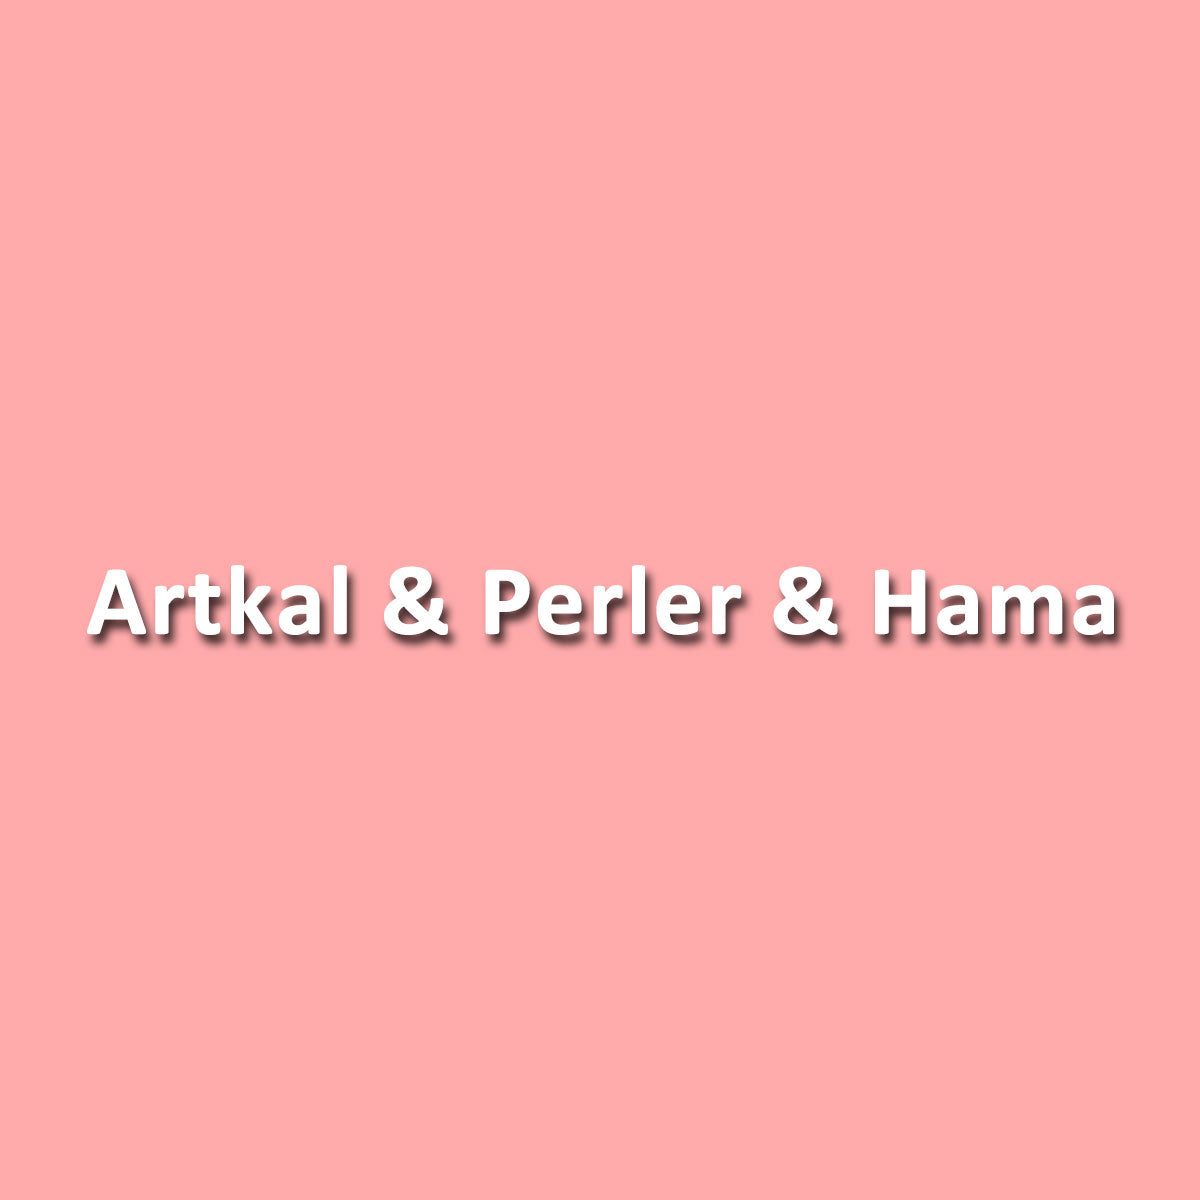 Quae series Artkal globuli perler et hama globulis compatiuntur?